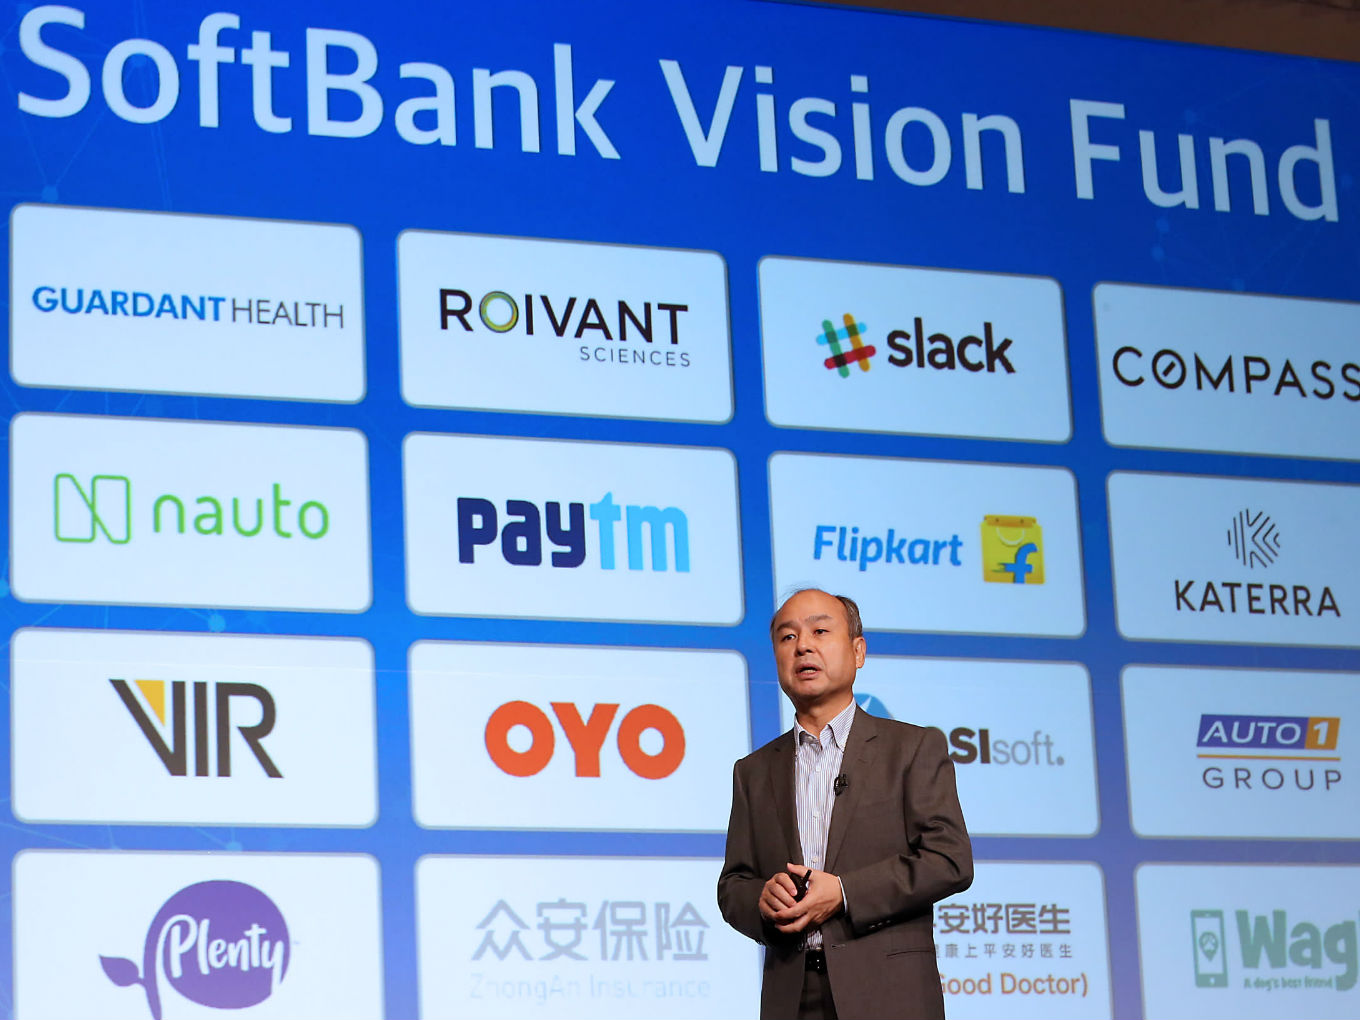 Softbank-vision-fund-feature.jpg